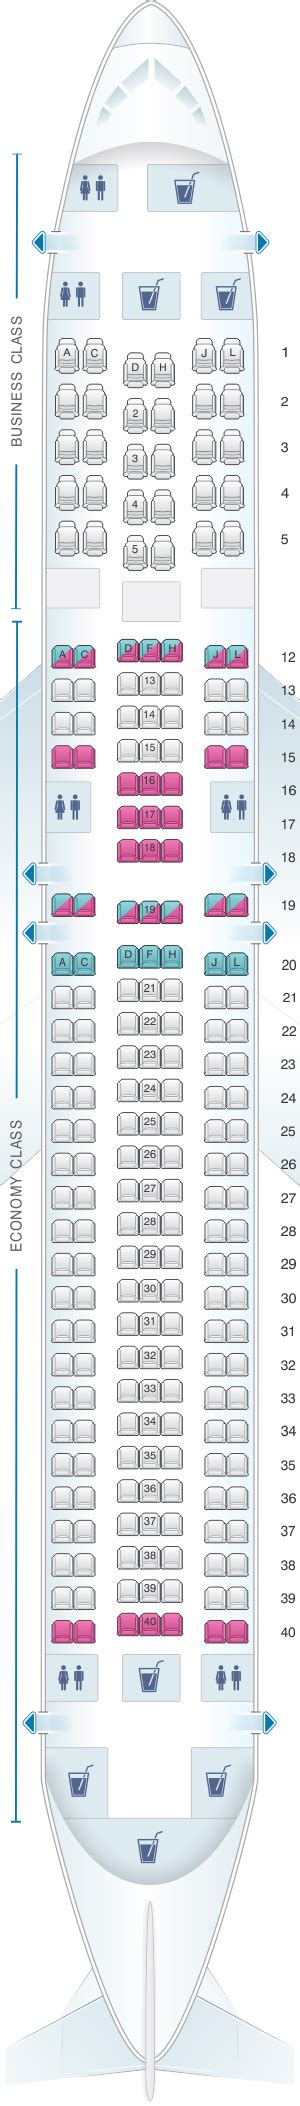 latam boeing 767-300 seating chart